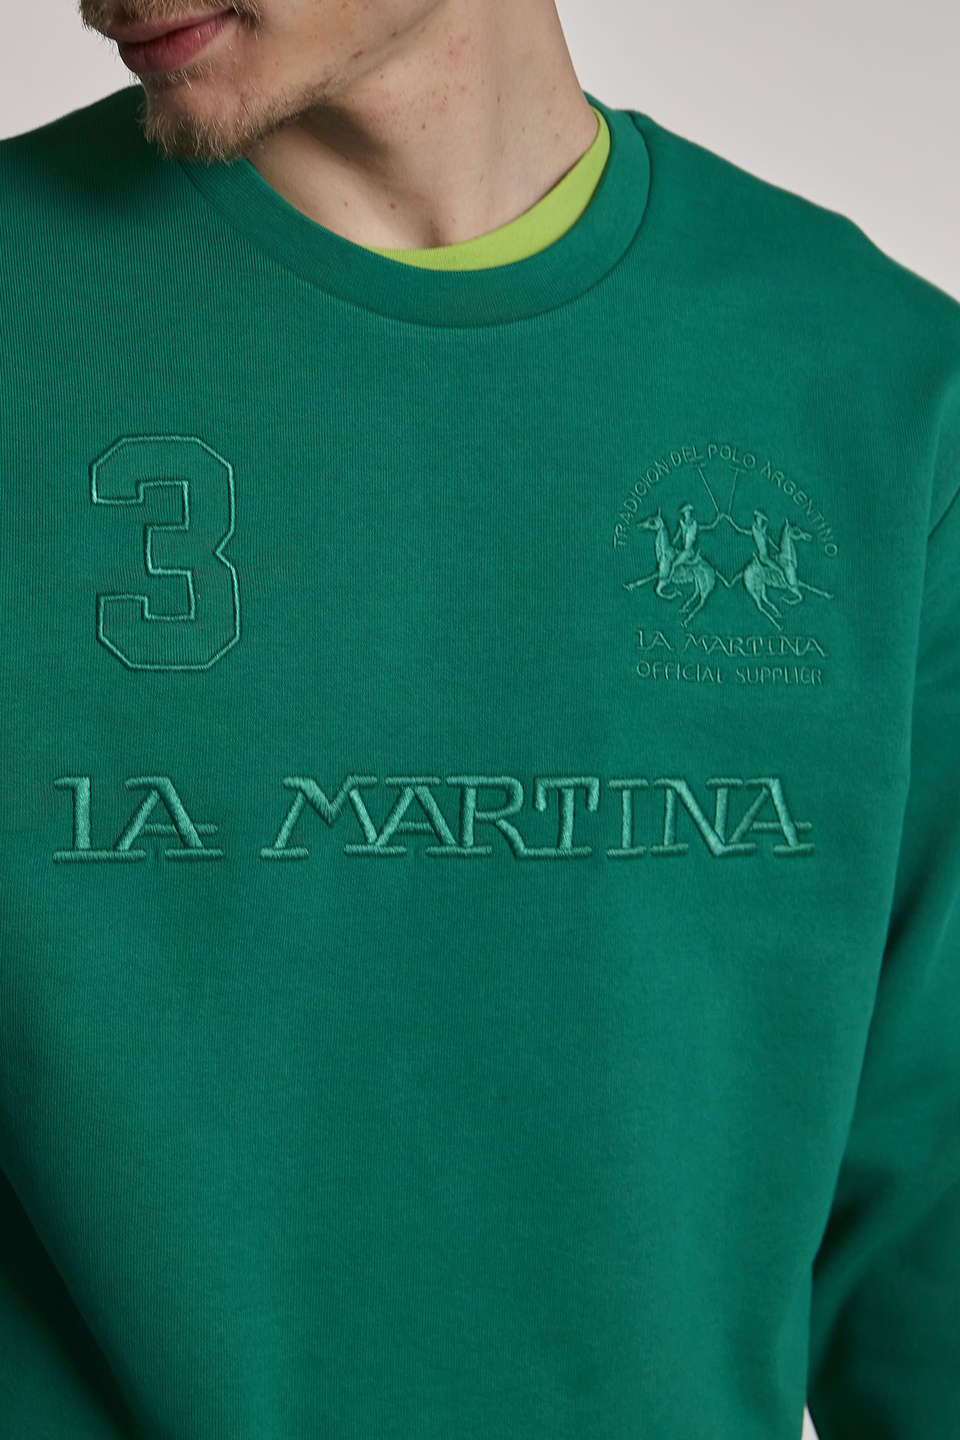 Felpa da uomo in cotone girocollo regular fit - La Martina - Official Online Shop